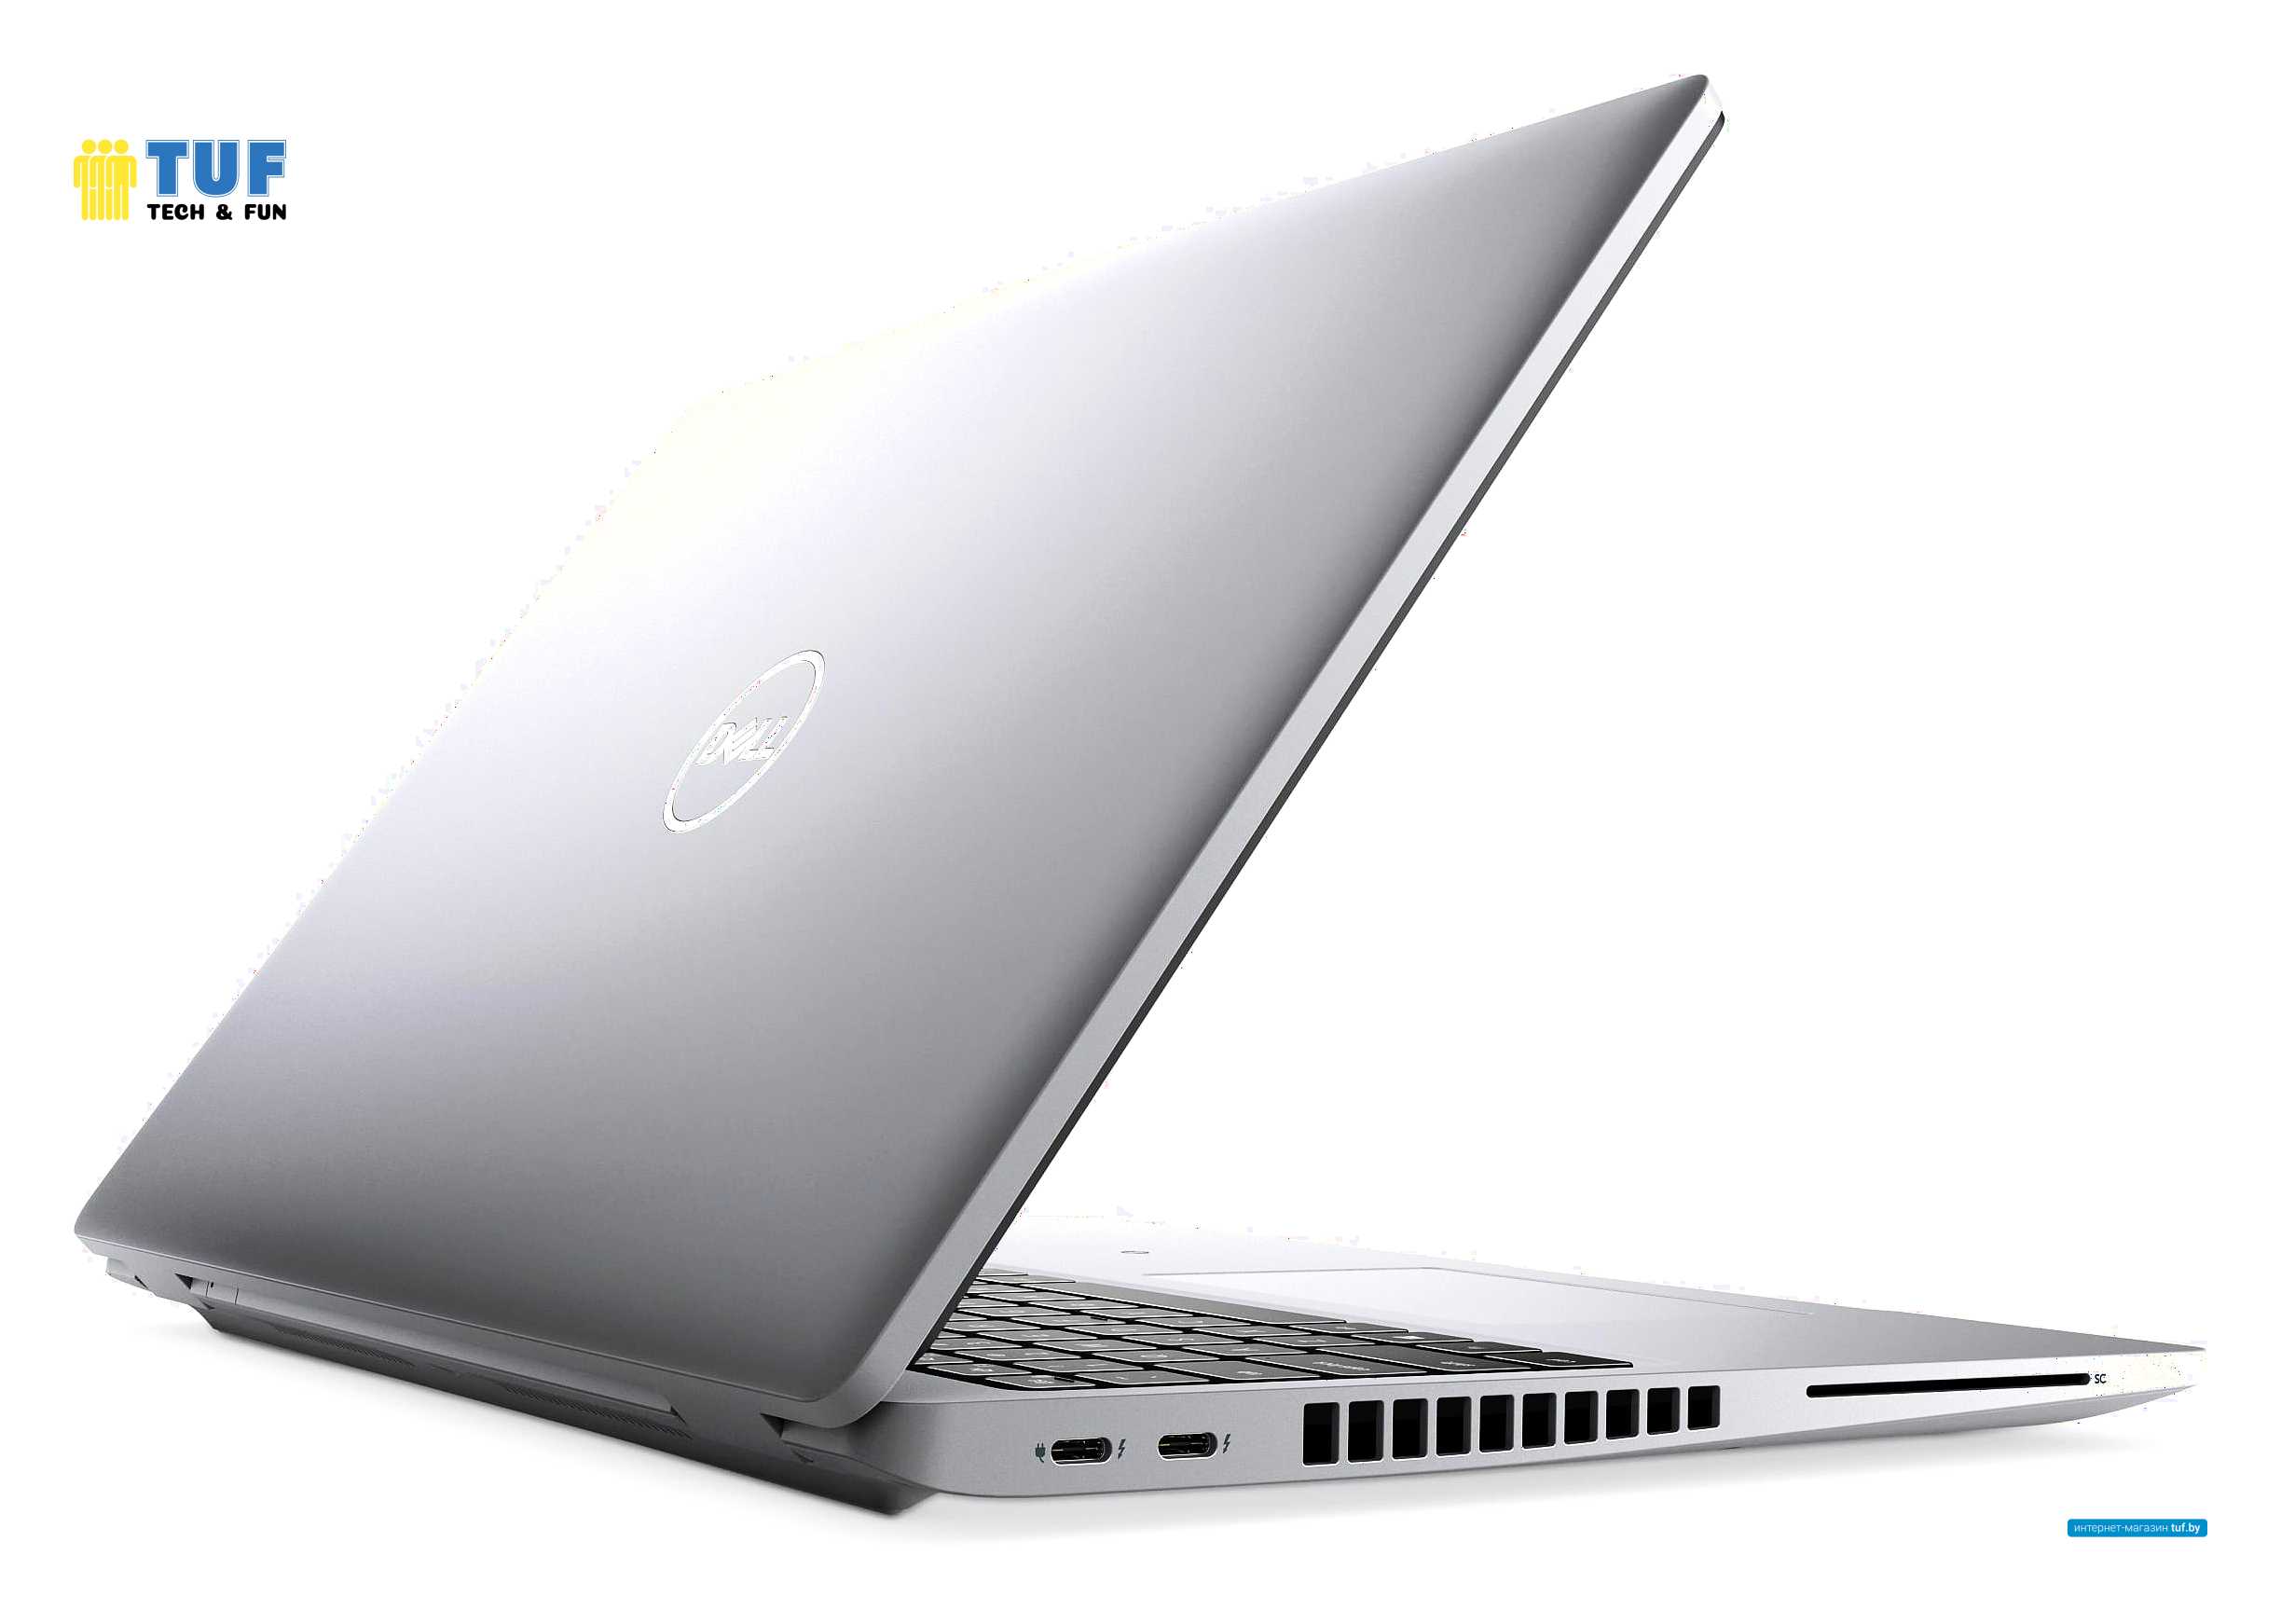 Ноутбук Dell Latitude 15 5520-378816